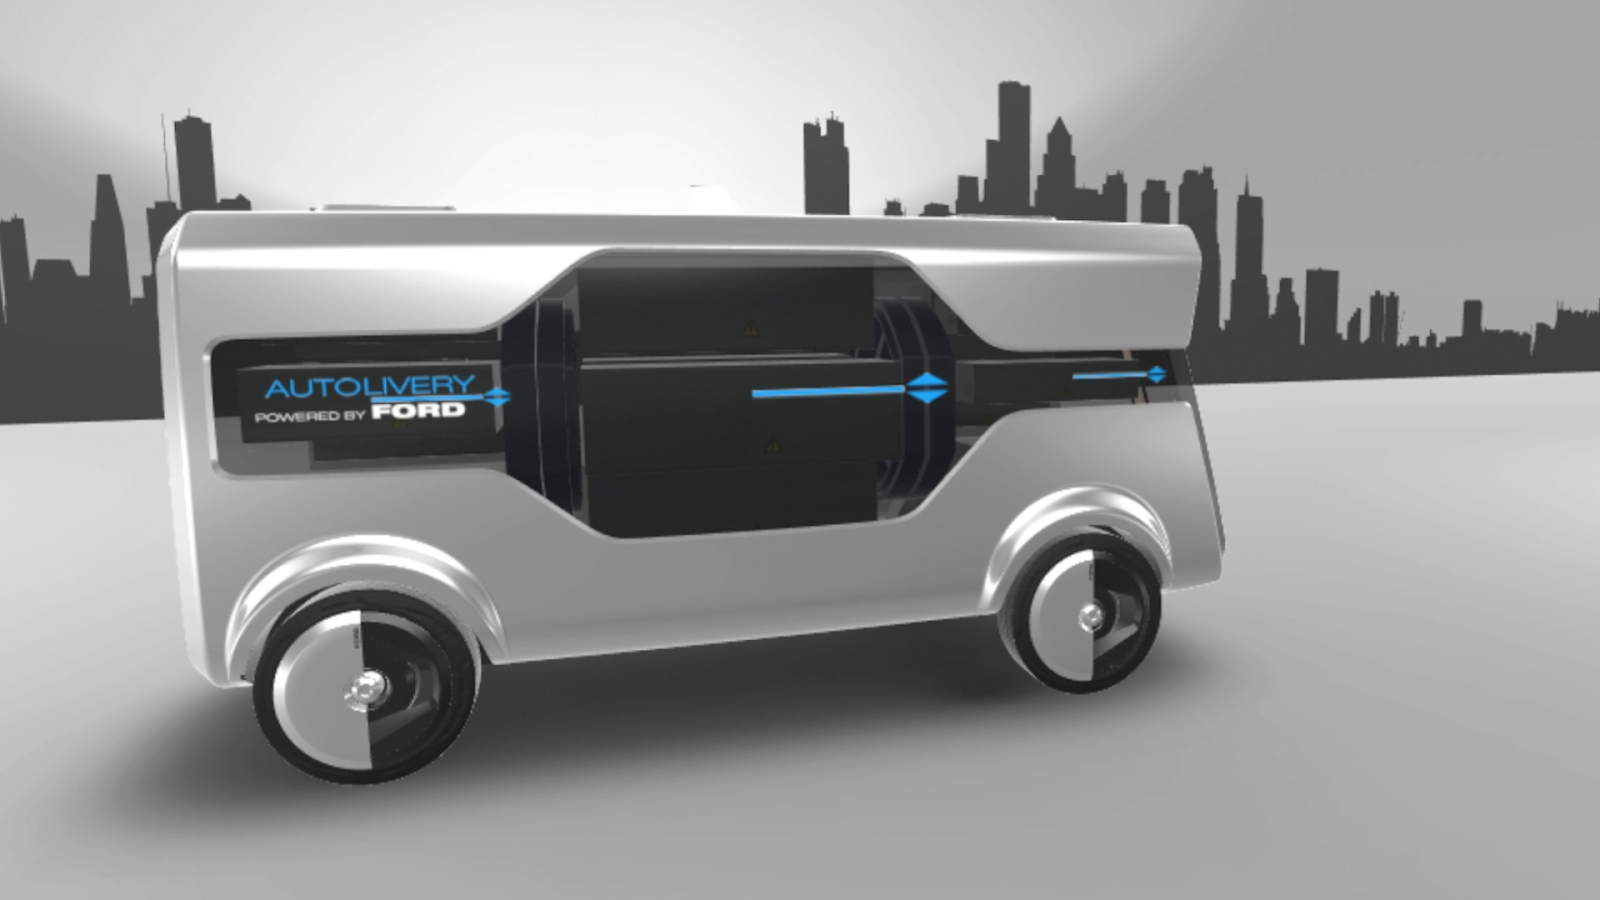 FORD 2017 MWC Autolivery 08 Ford : H πόλη του μέλλοντος θα έχει αυτόνομα van και drone... για delivery